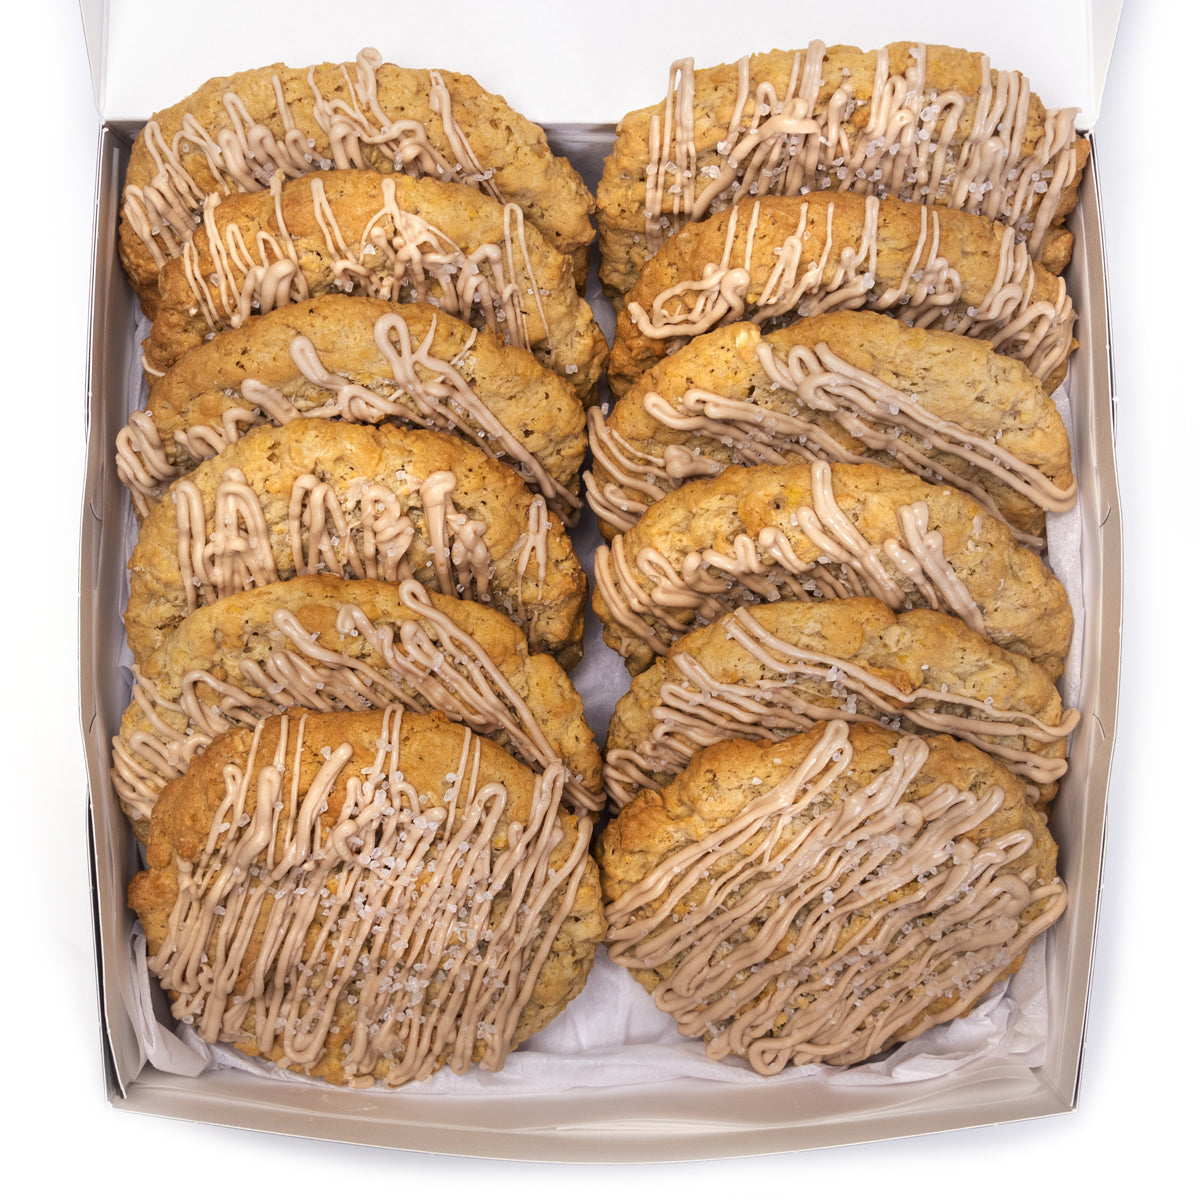 A Dozen Sea Salt Caramel Cookies